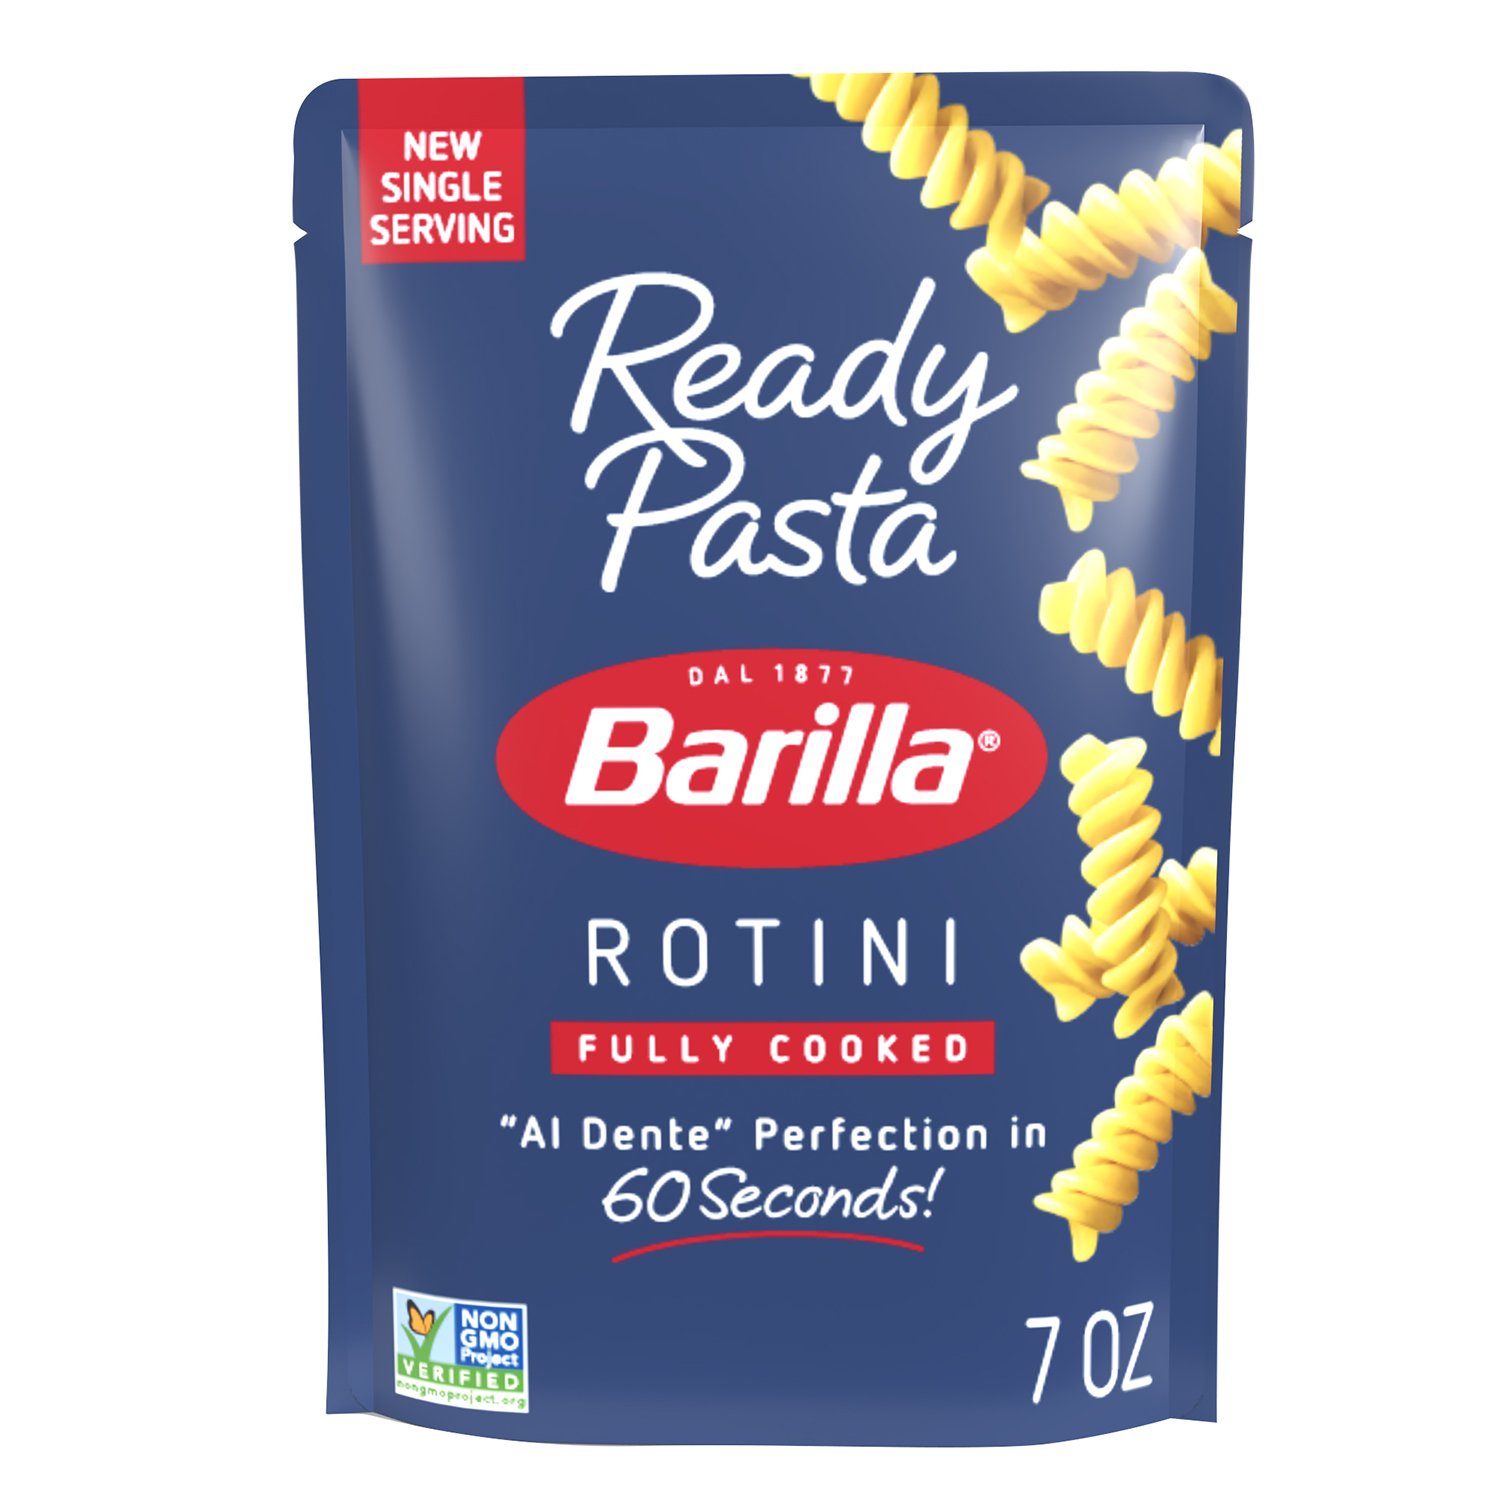 Barilla Ready Pasta Rotini Shop H-E-B at Pasta 